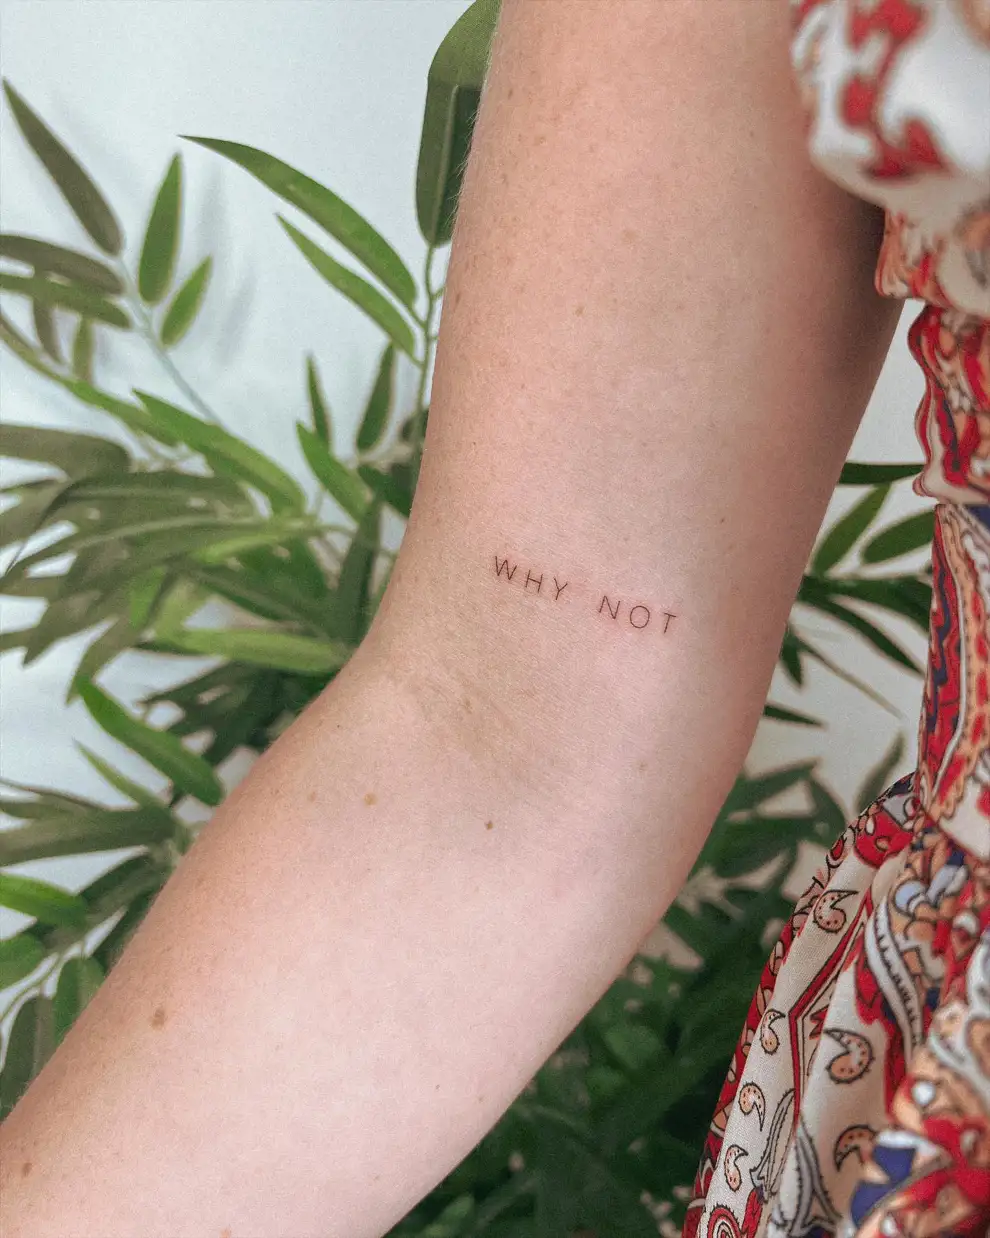 Tatuajes pequeños para mujer con palabras: why not